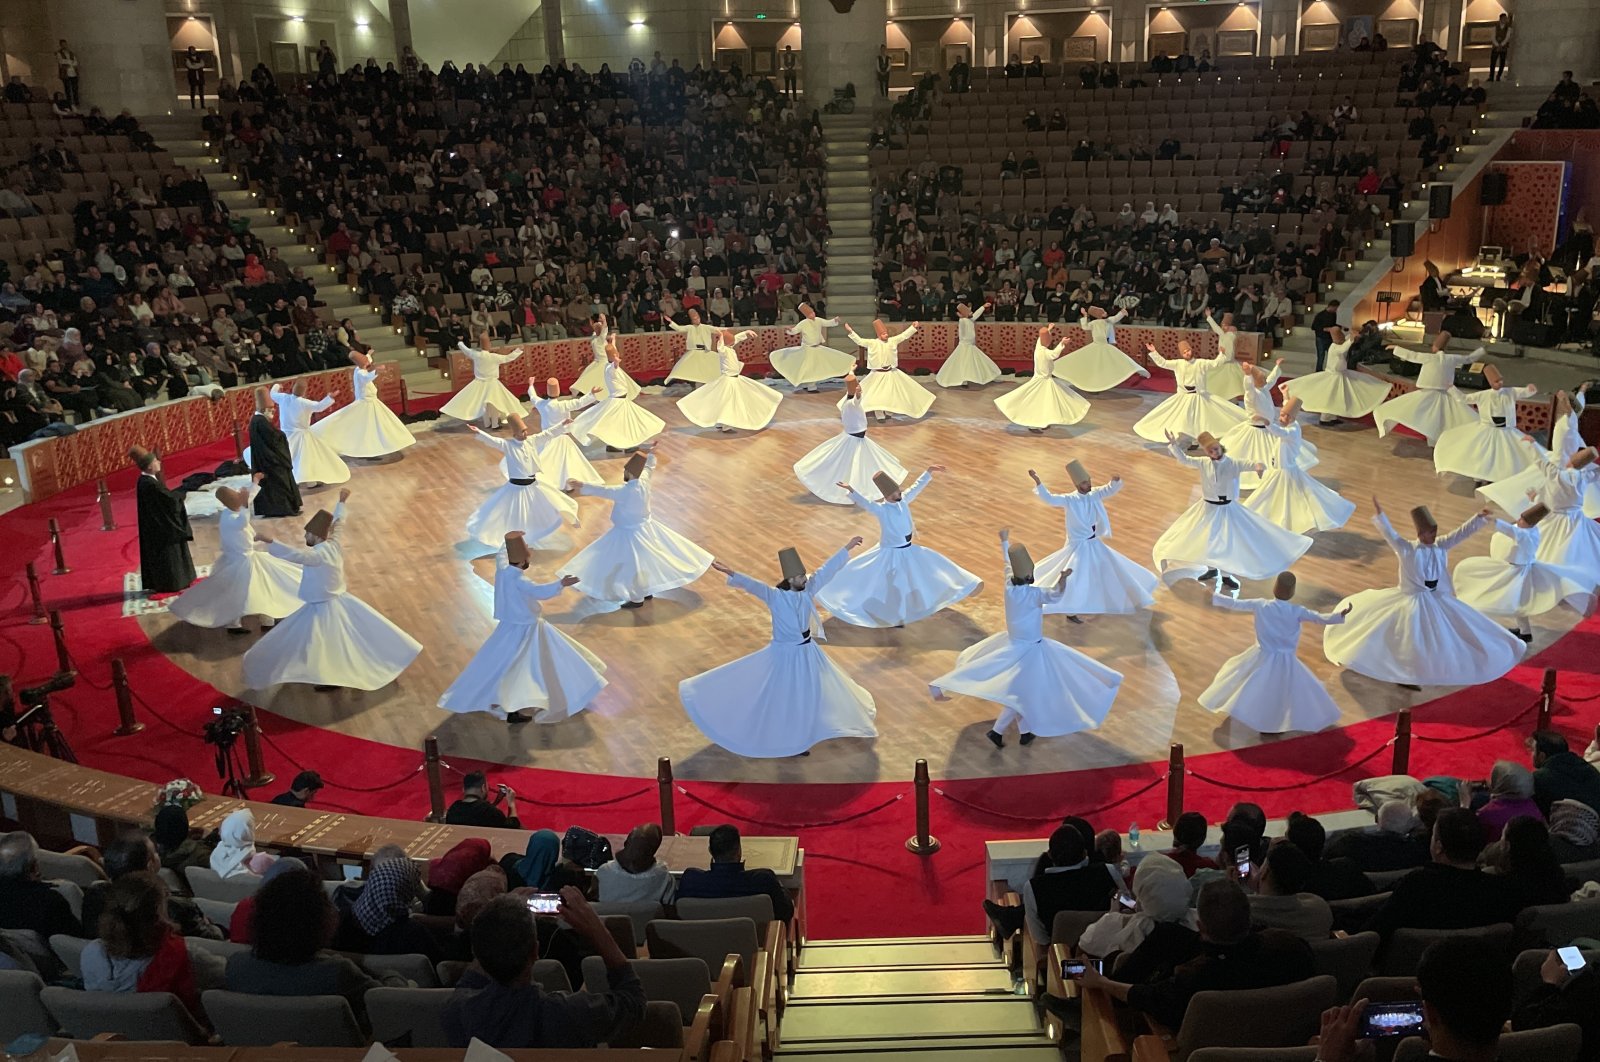 Rumi's legacy draws visitors to Türkiye on his death anniversary